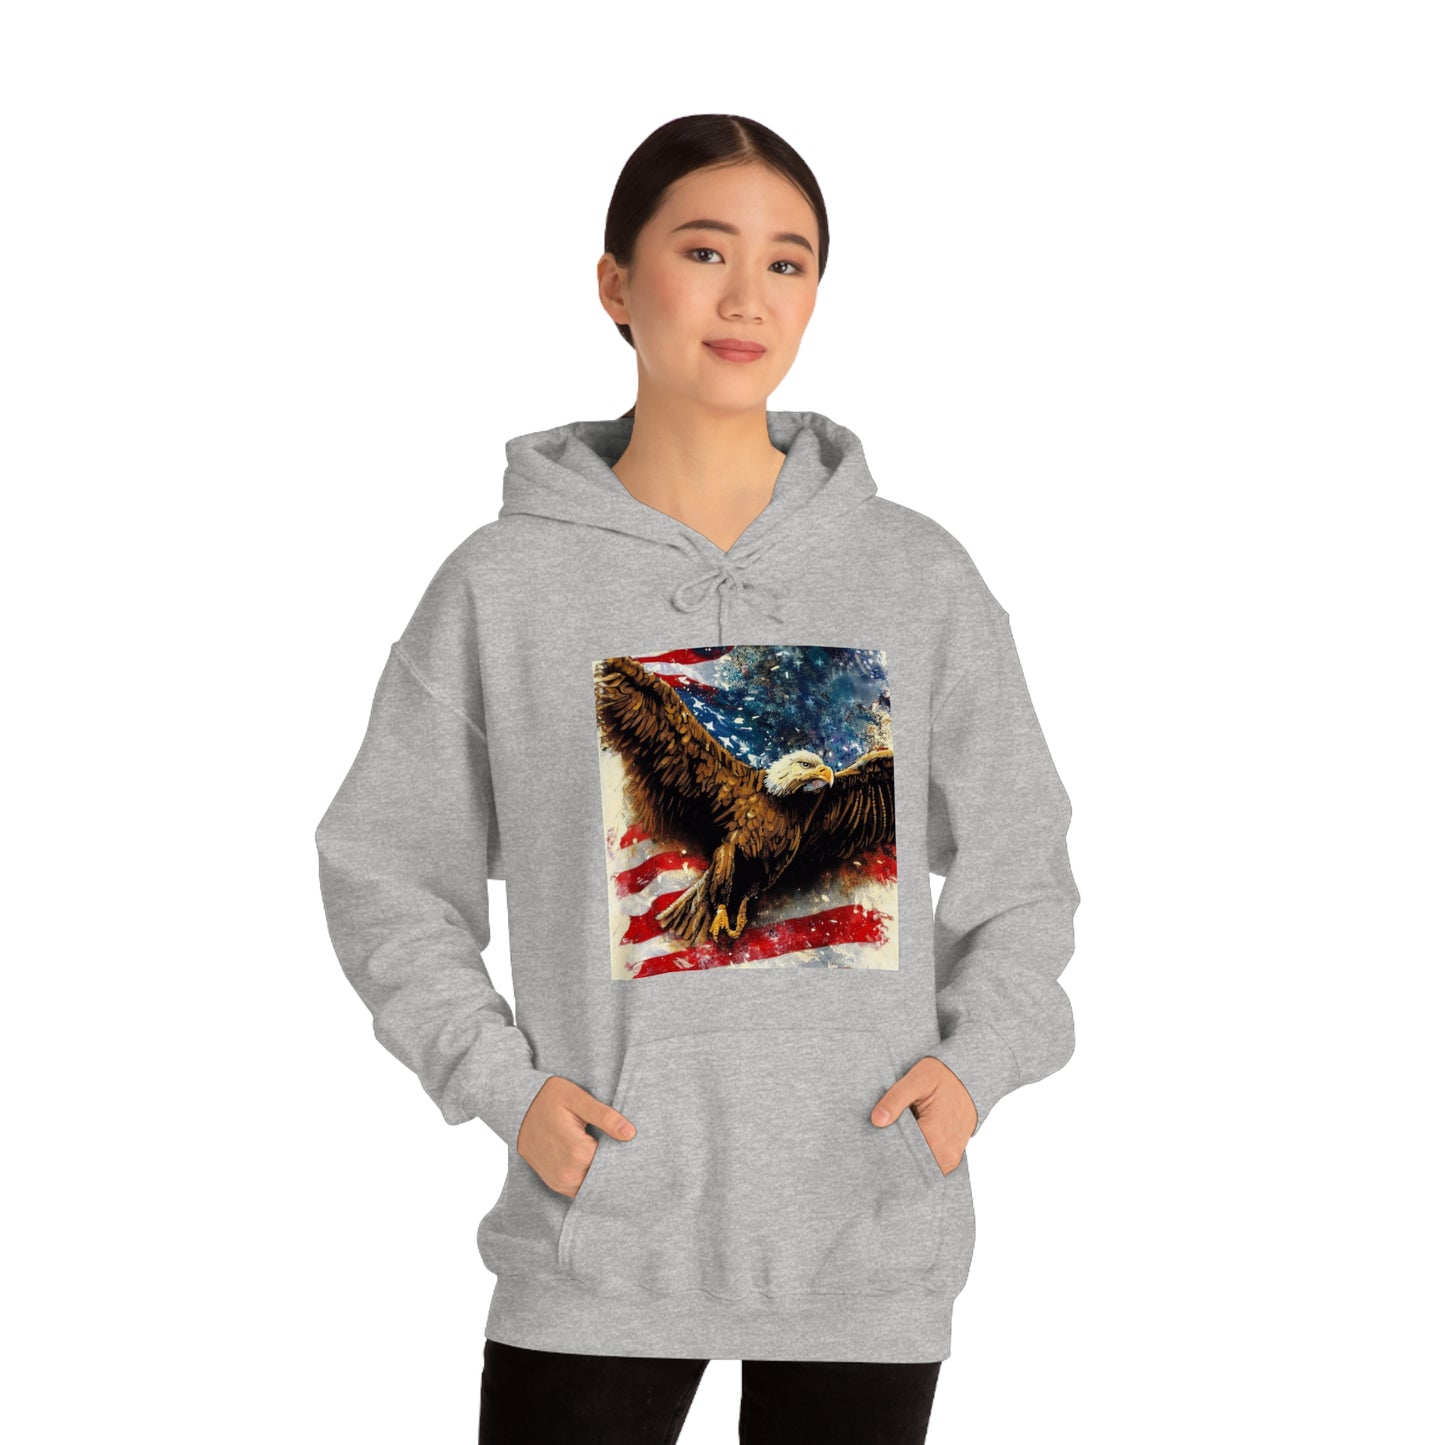 Fashion Unisex Heavy Blend™ Hooded Sweatshirt - USA All the Way Soaring Eagle Hoodies